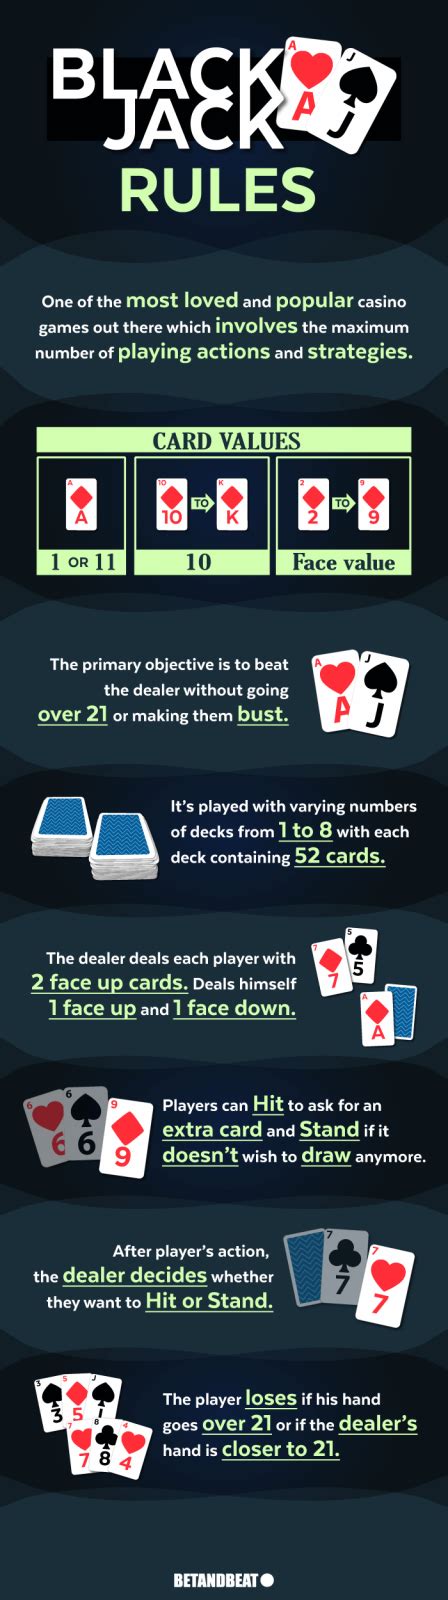 dealer casino blackjack rules ajqp